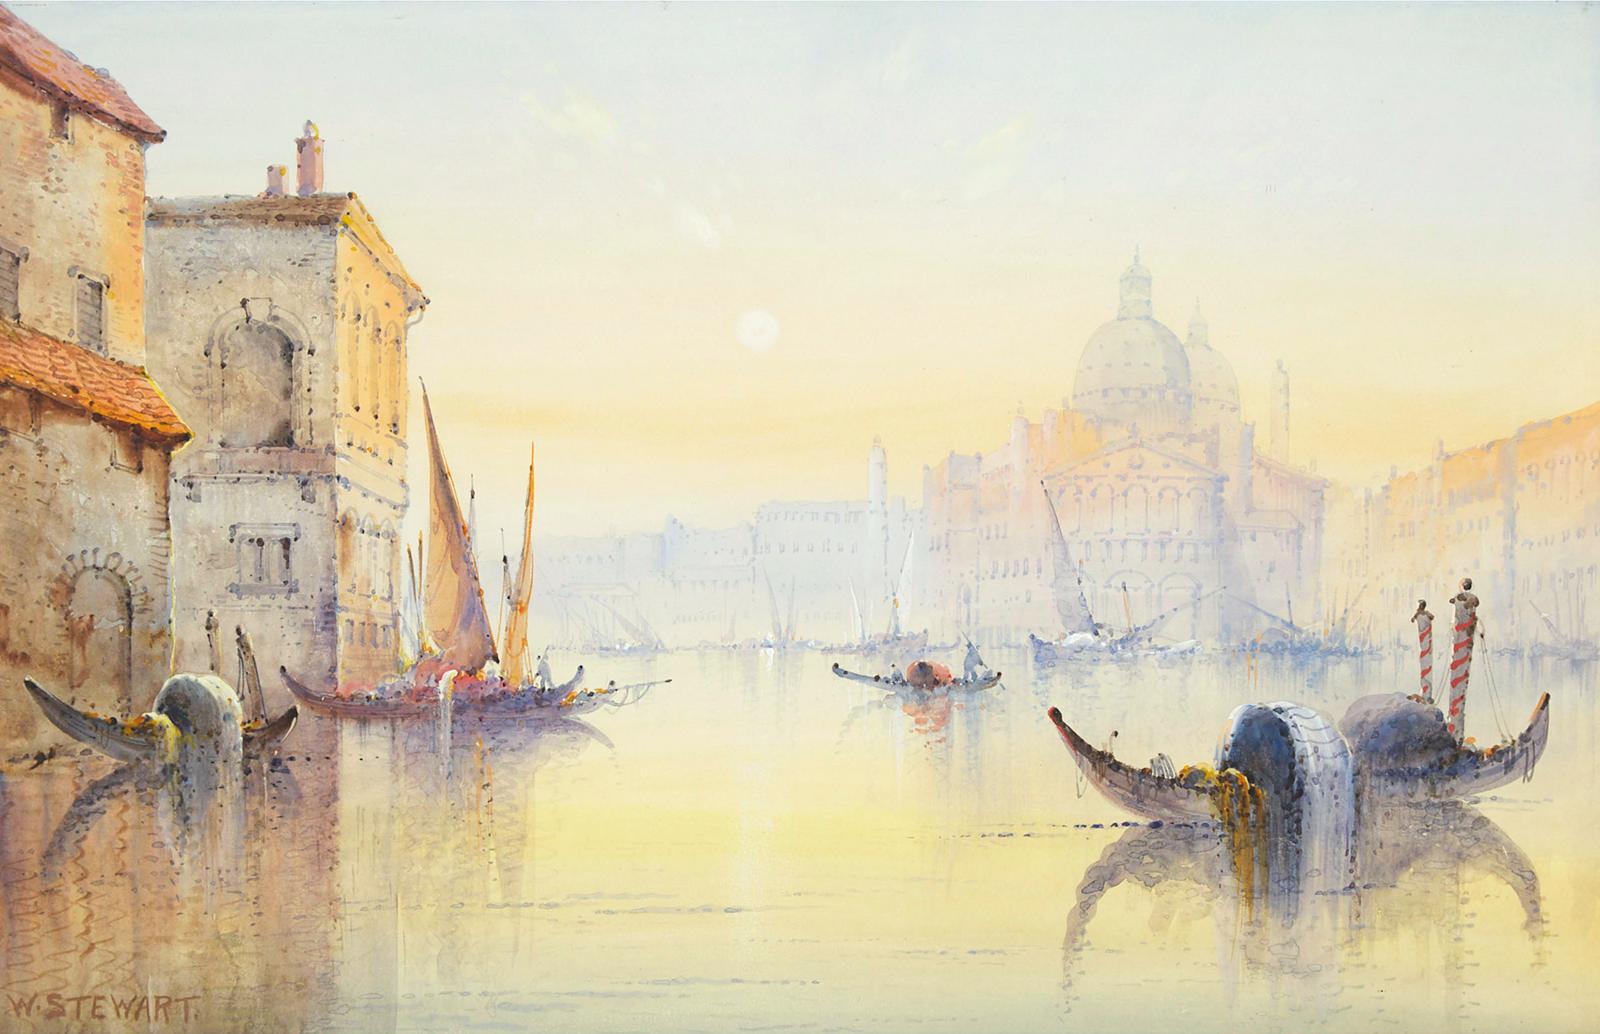 W. Stewart - Venice